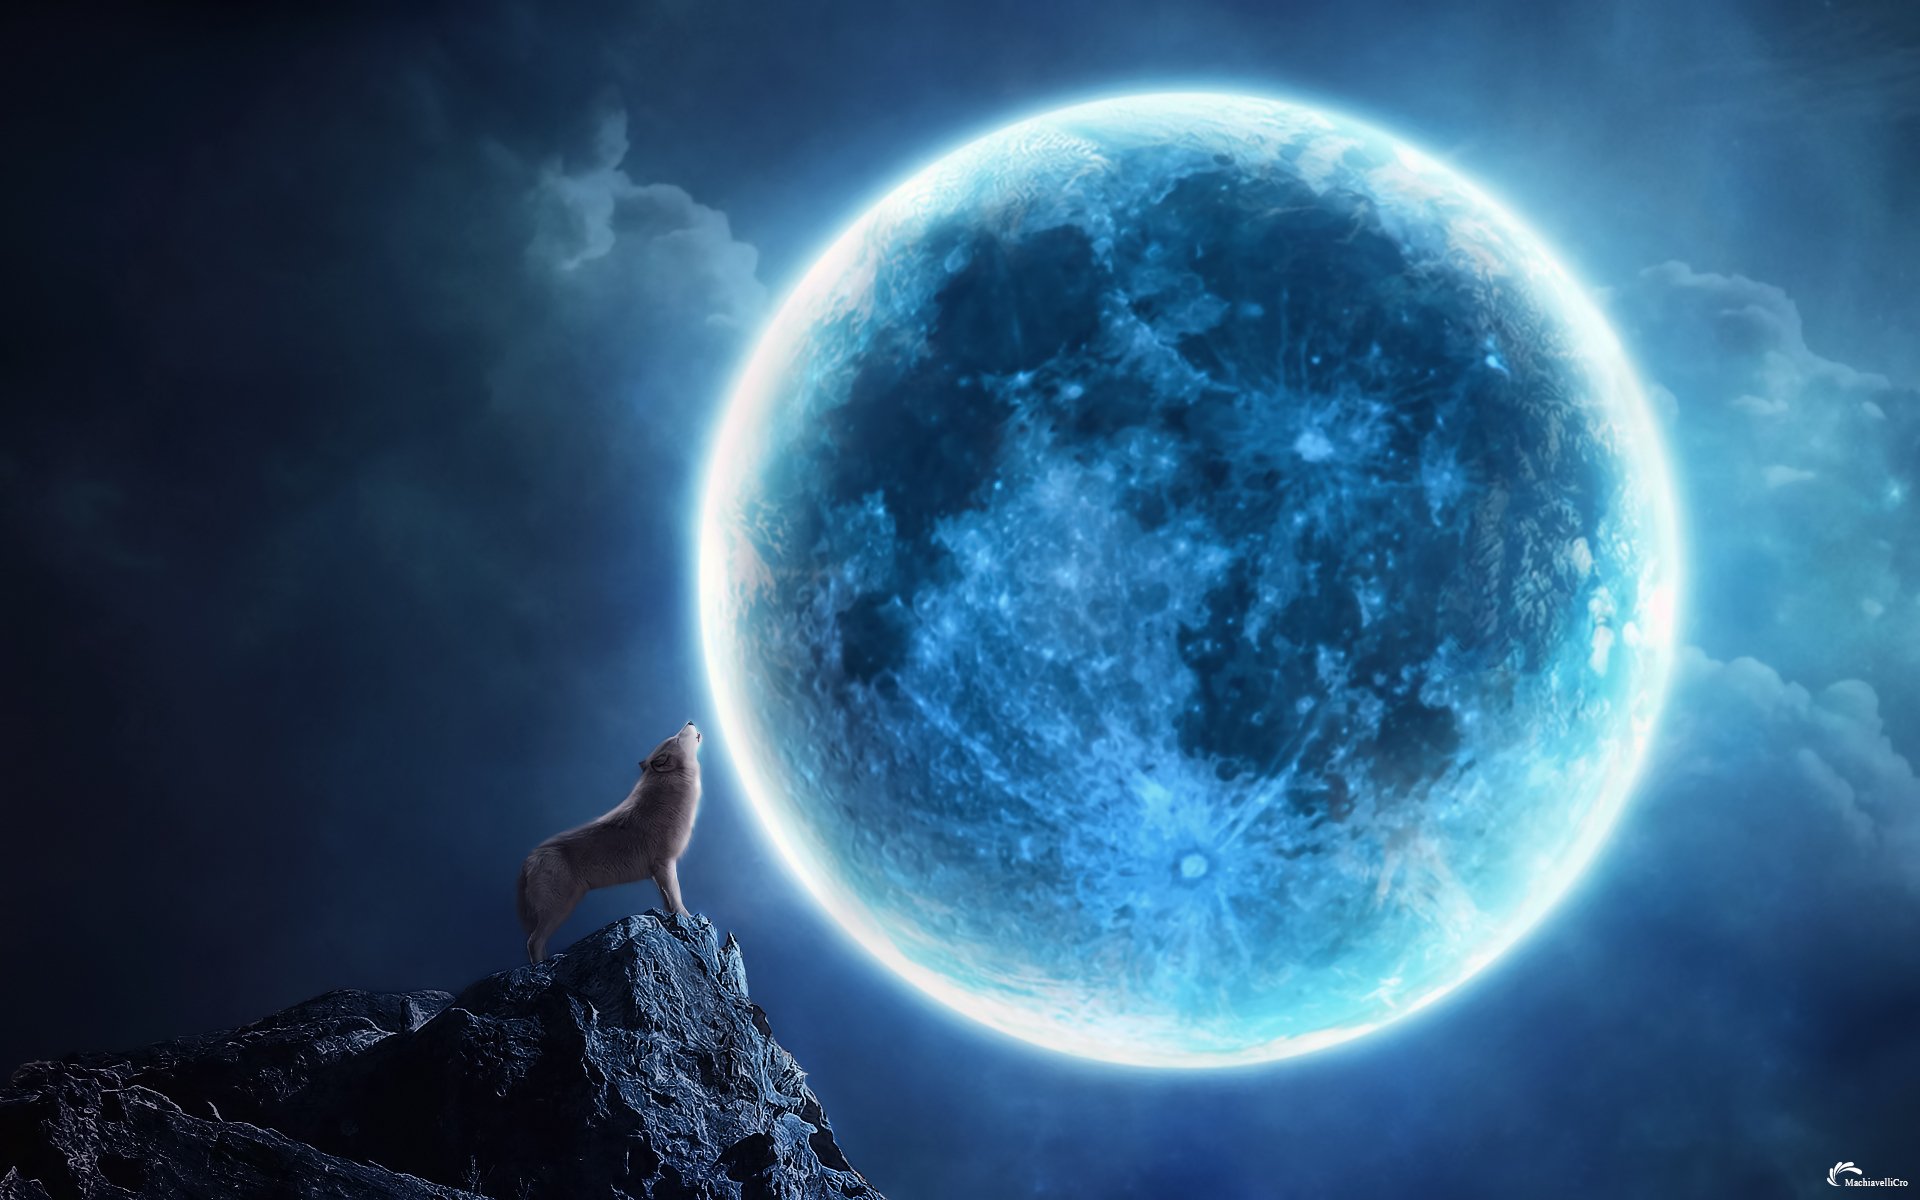  wolf landscapes night moonlight moon sky clouds magic mood wallpaper